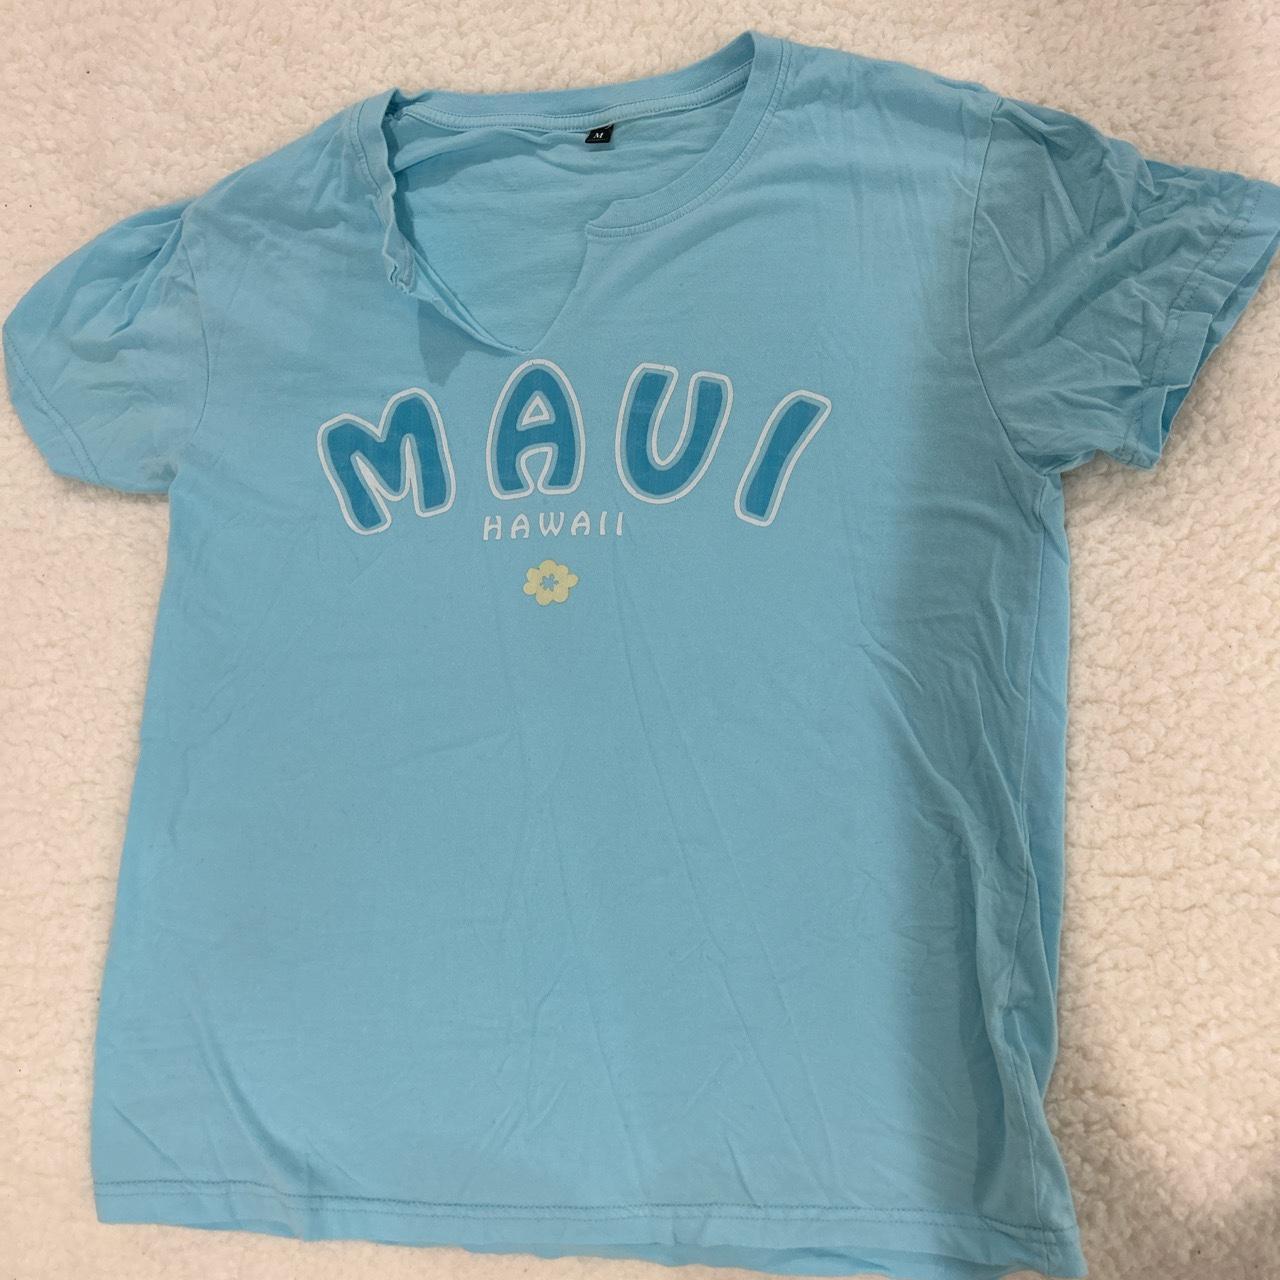 maui hawaii t-shirt - Depop